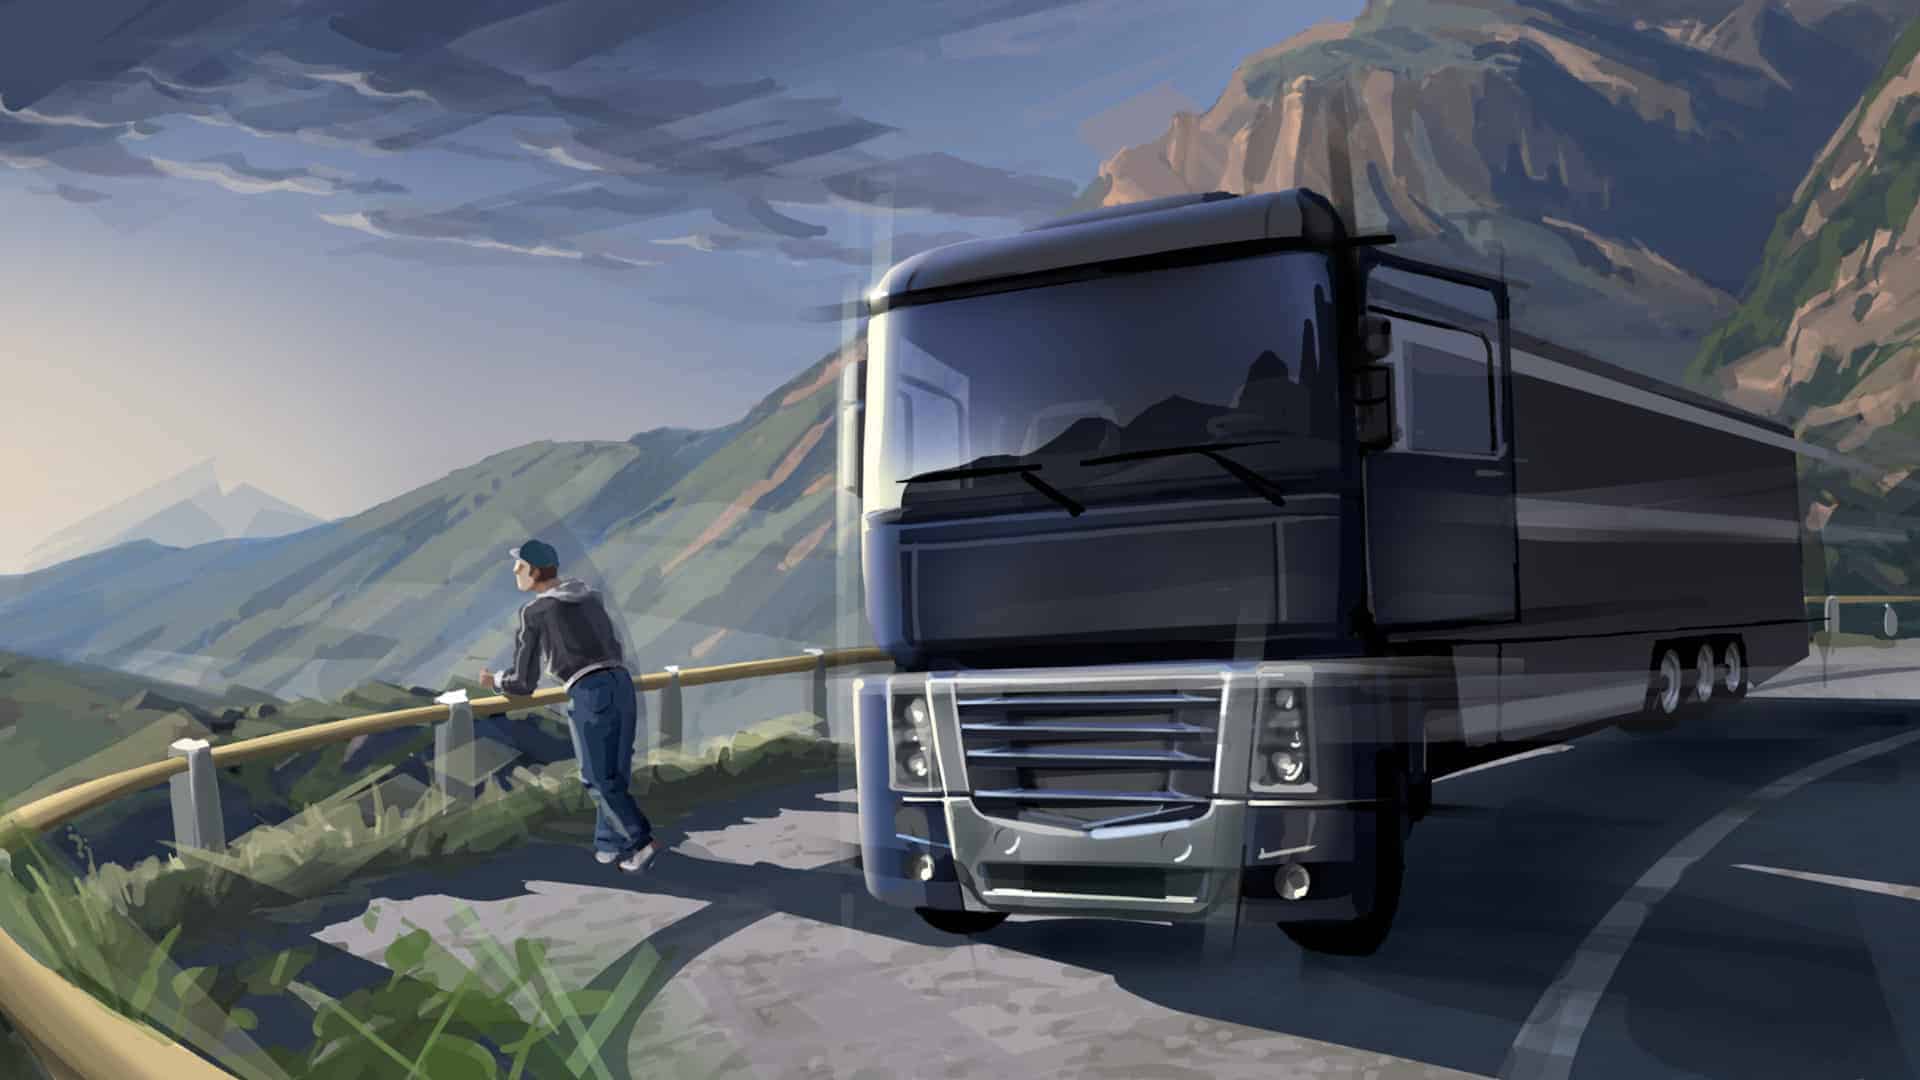 euro truck simulator setup download for pc